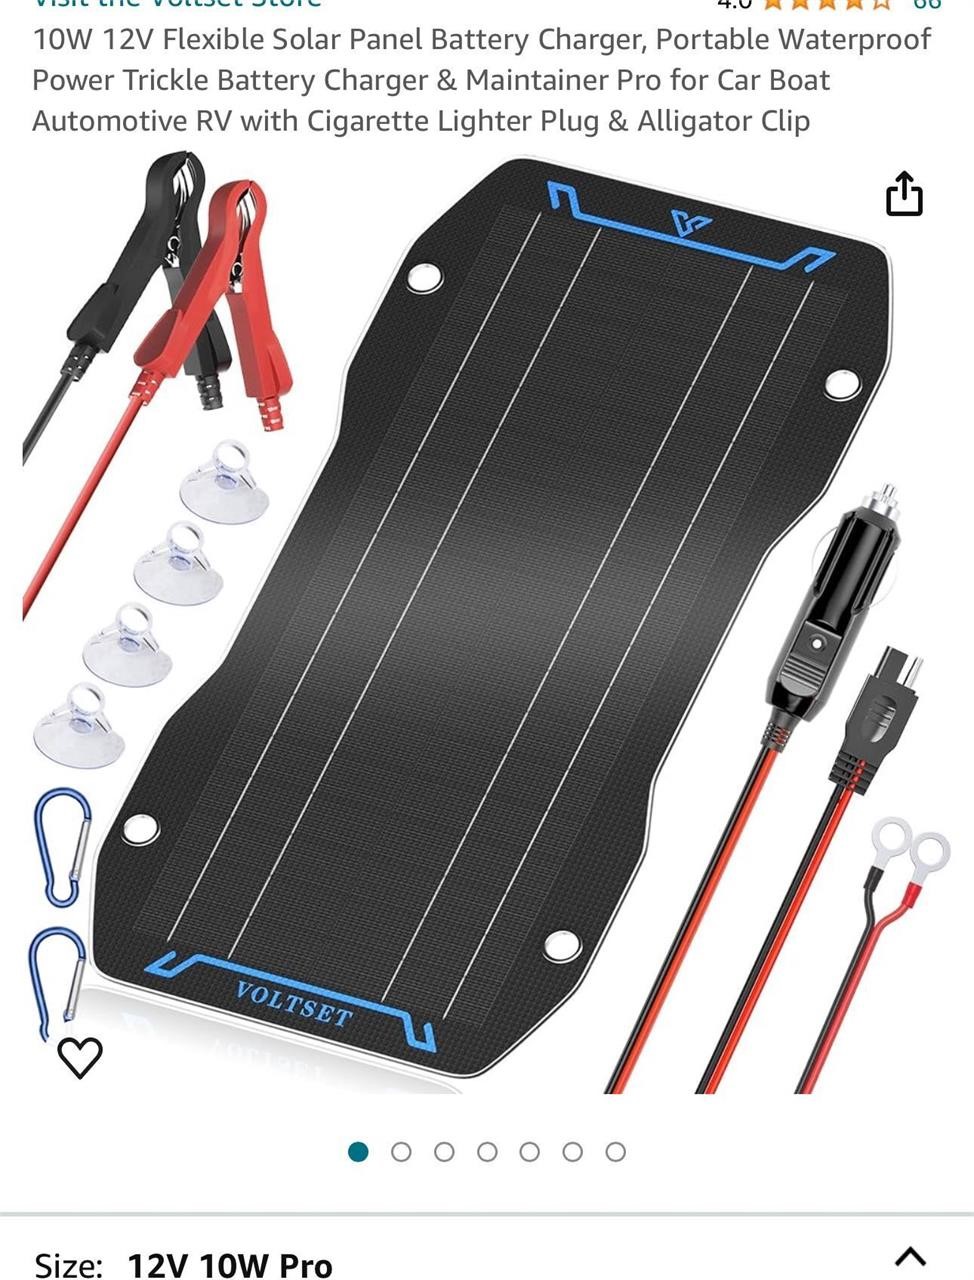 10W 12V Flexible Solar Panel Battery Charger